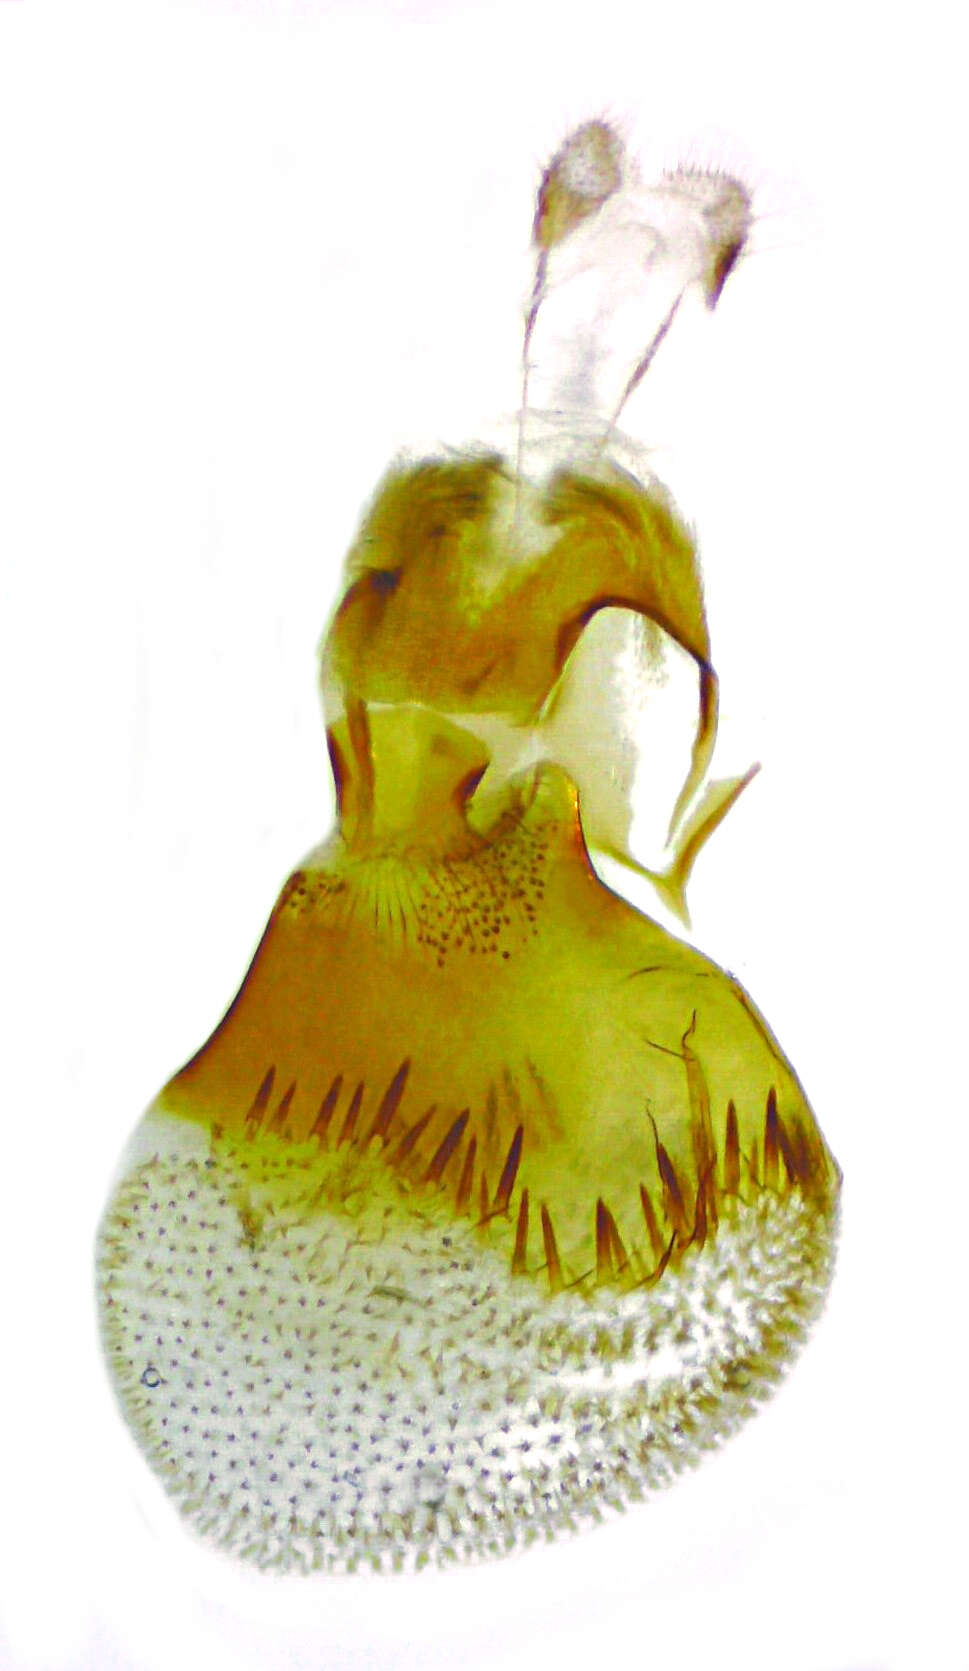 Image of Eupithecia huachuca Grossbeck 1908